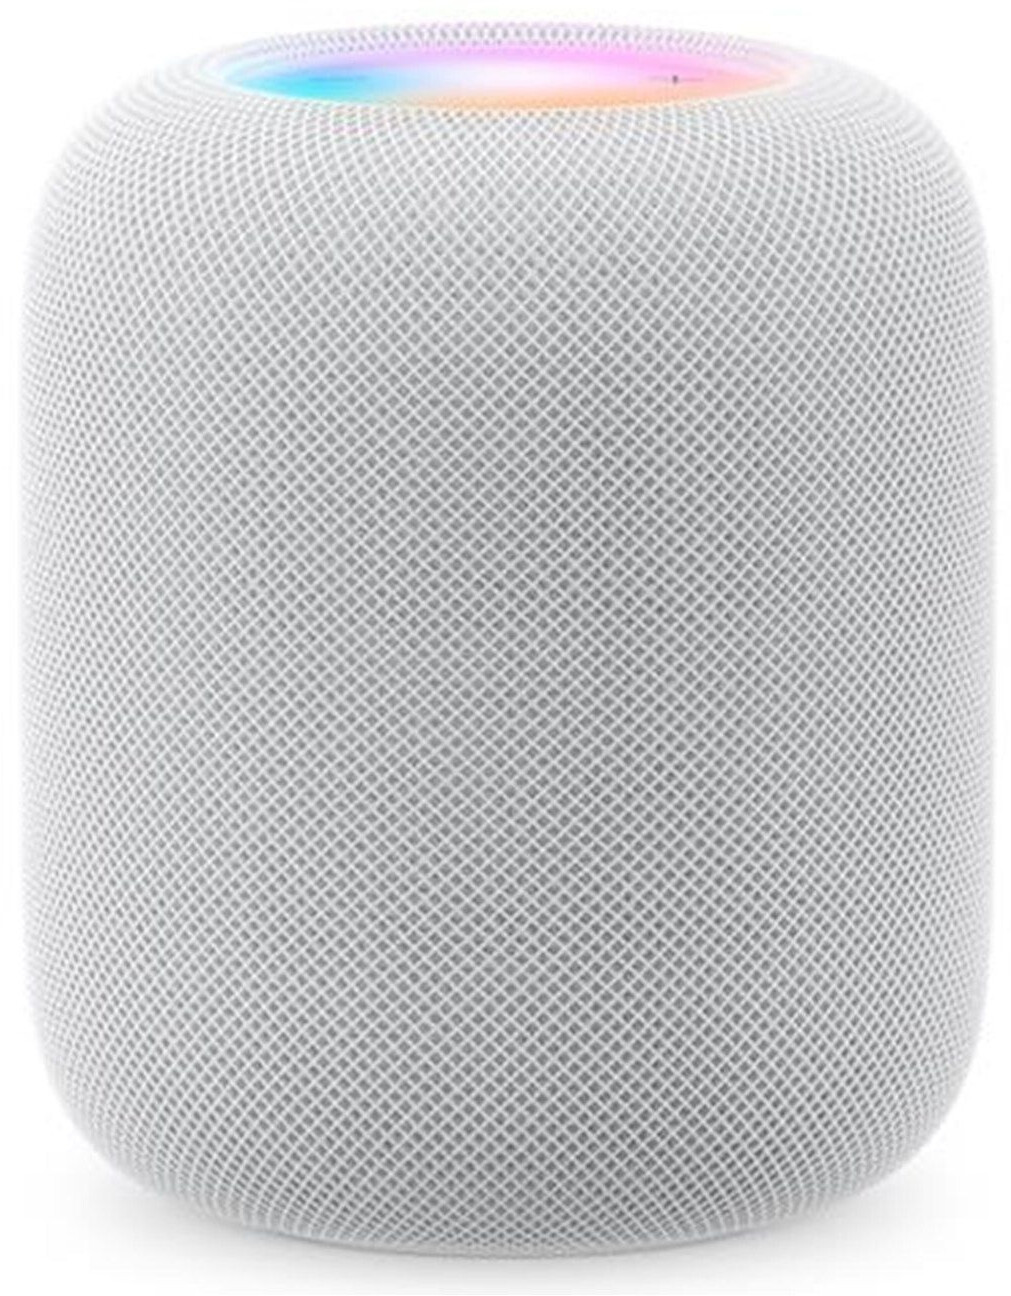 Apple HomePod (2nd Generation) White